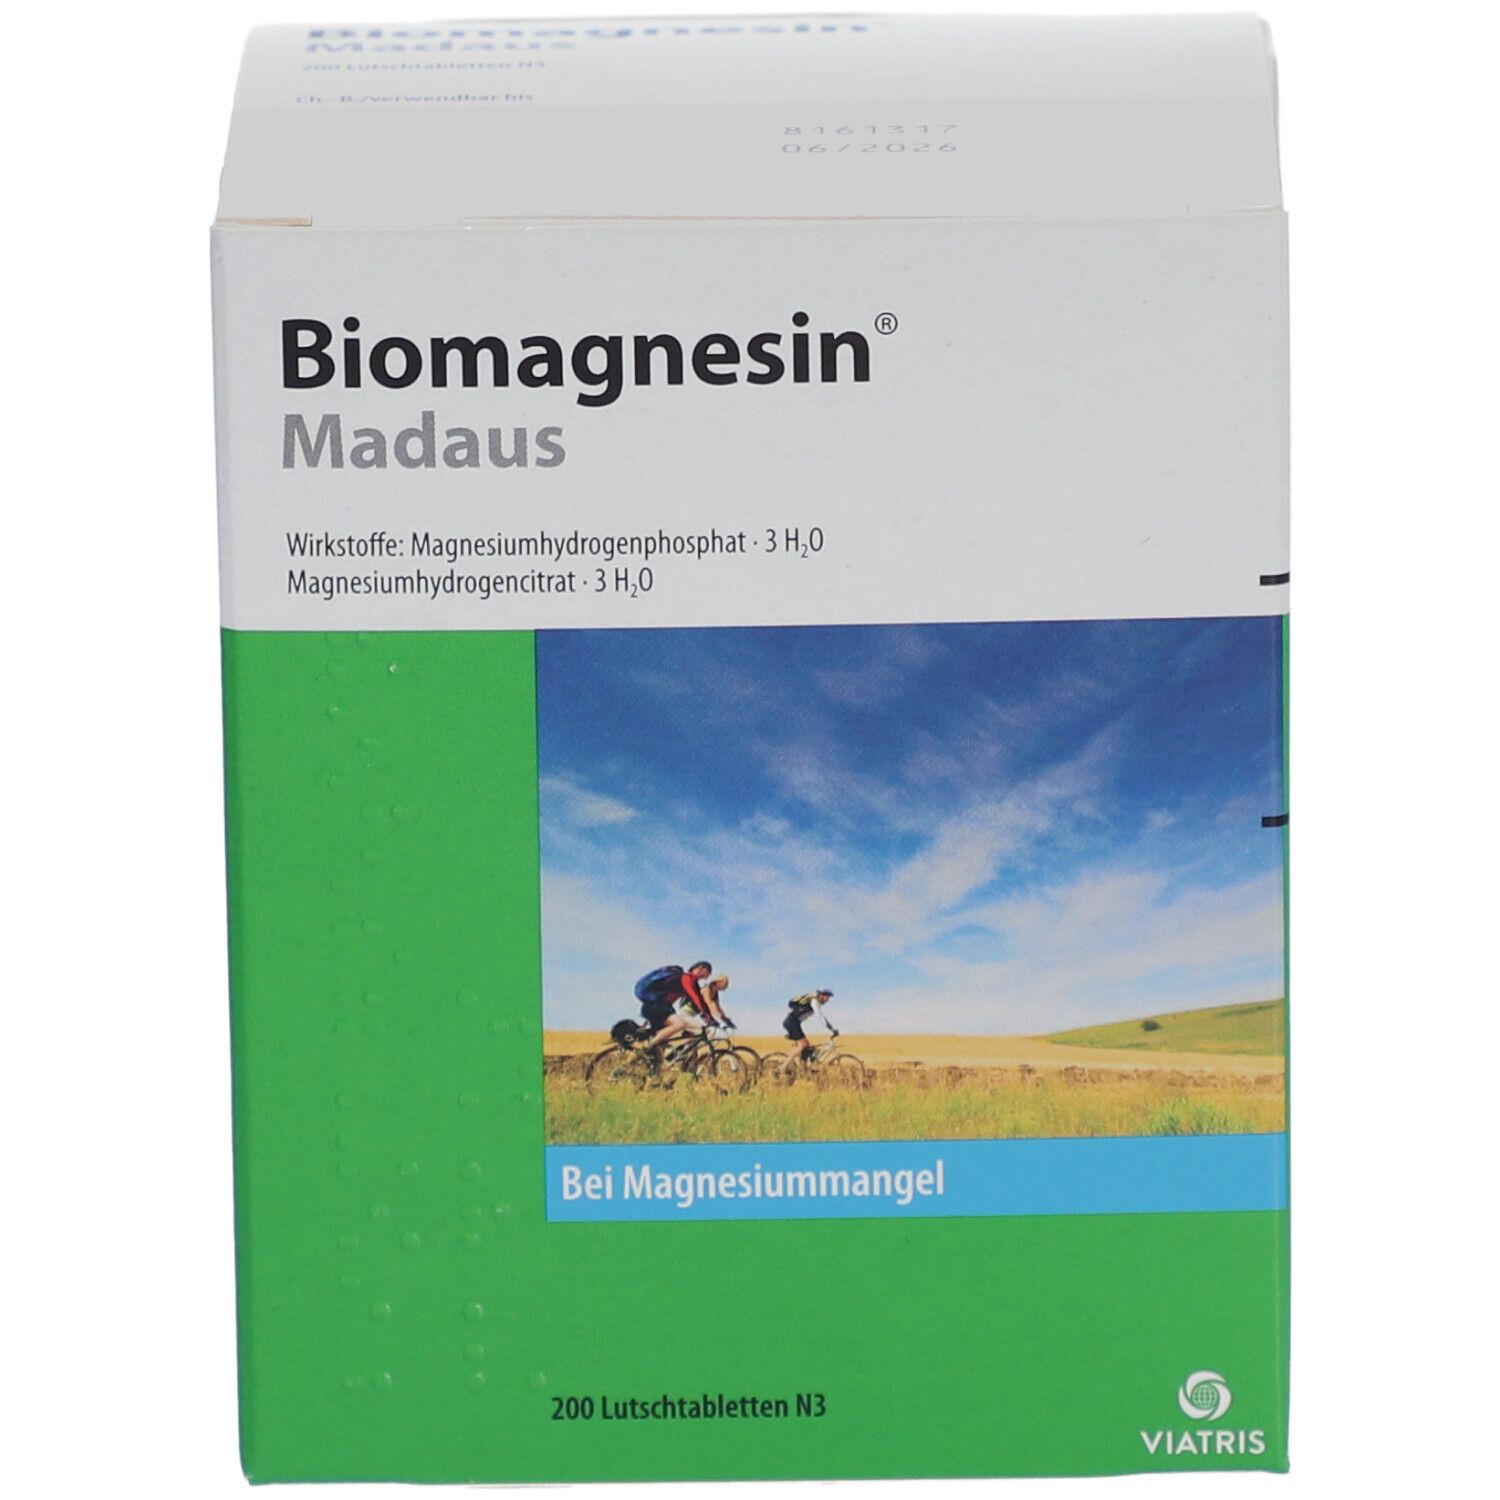 Biomagnesin® Madaus